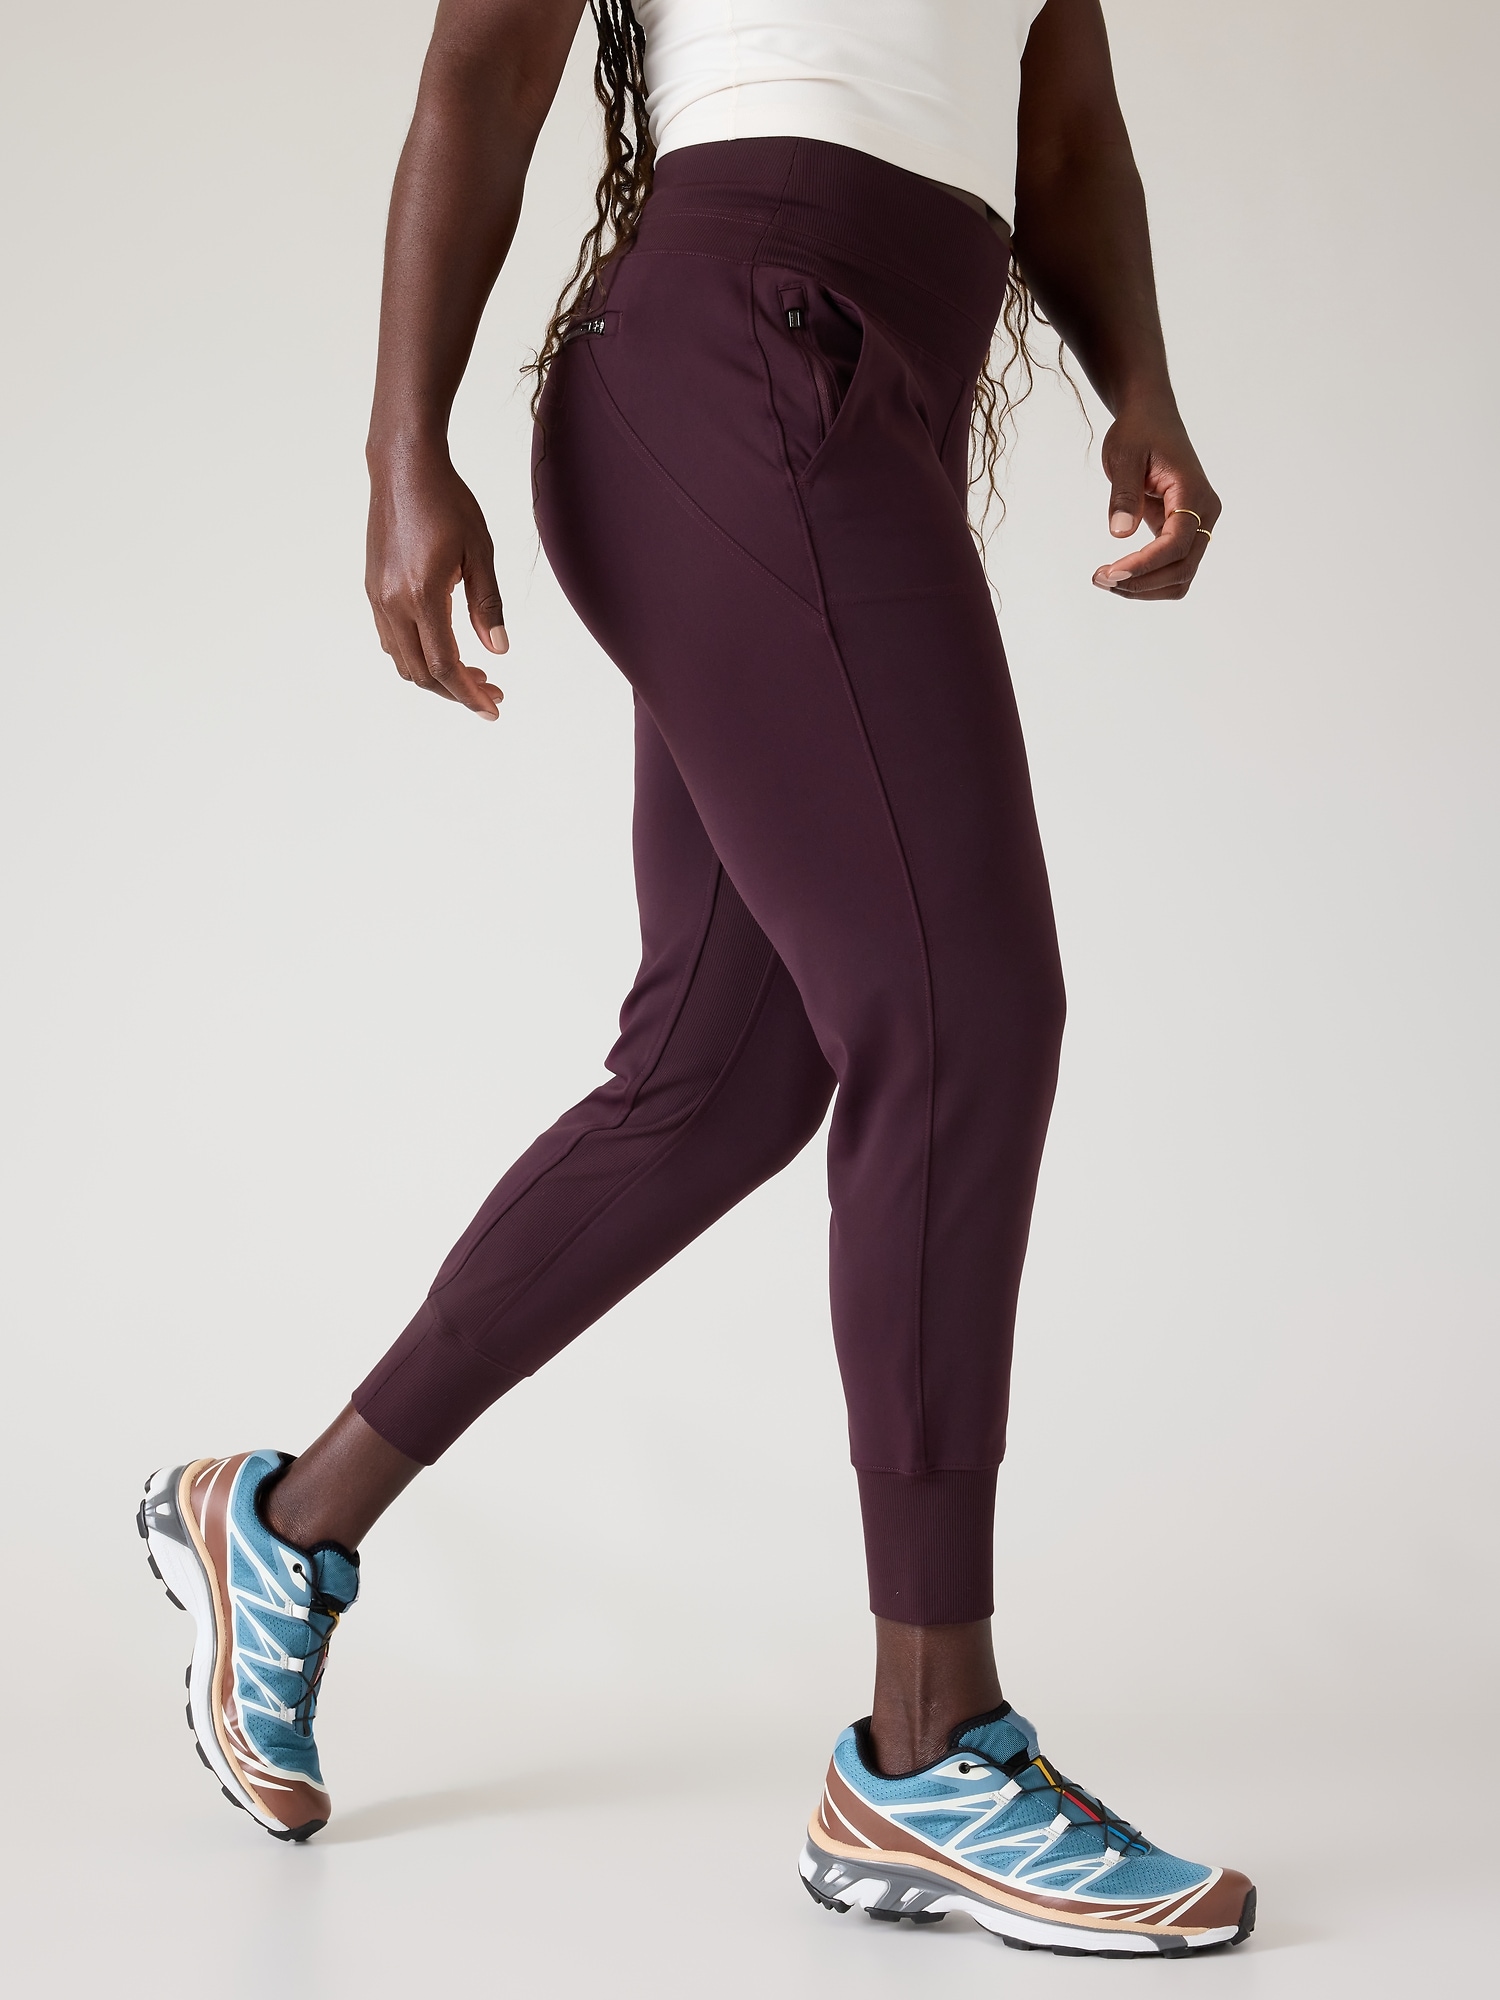 Athleta Black Venice Velvet Stripe Jogger Pants Size XS - $45 - From Madi